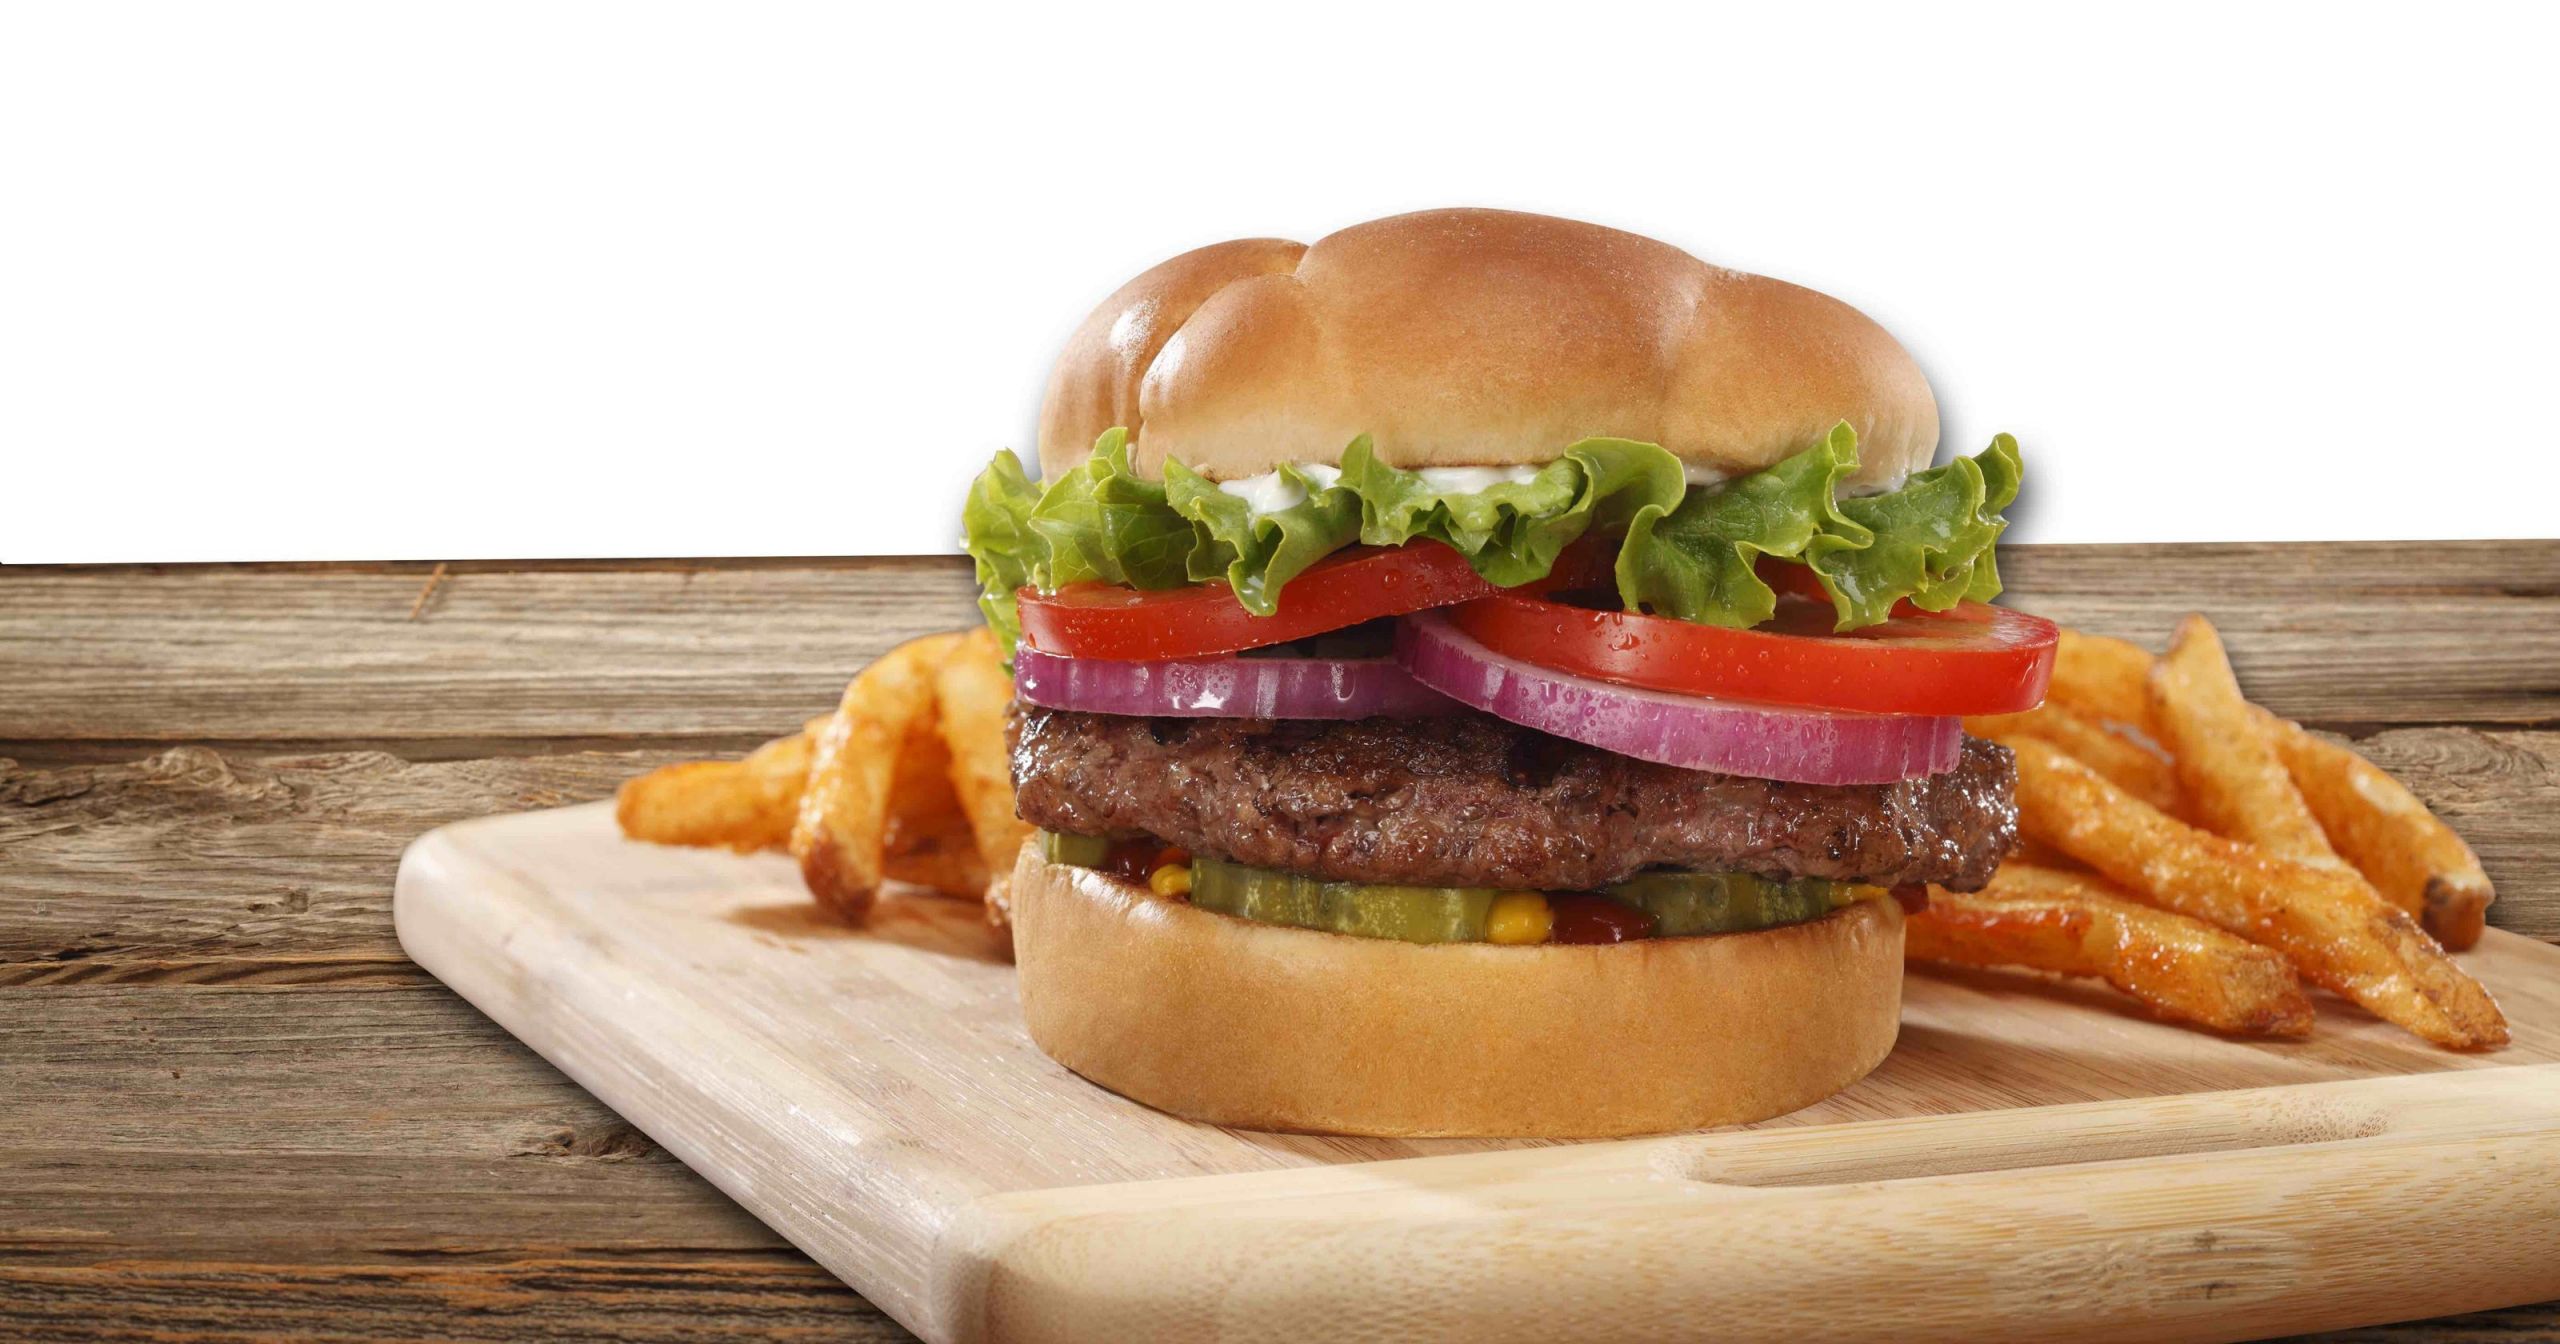 Backyard Burger Jackson Ms
 A beginner s guide to Back Yard Burgers taste